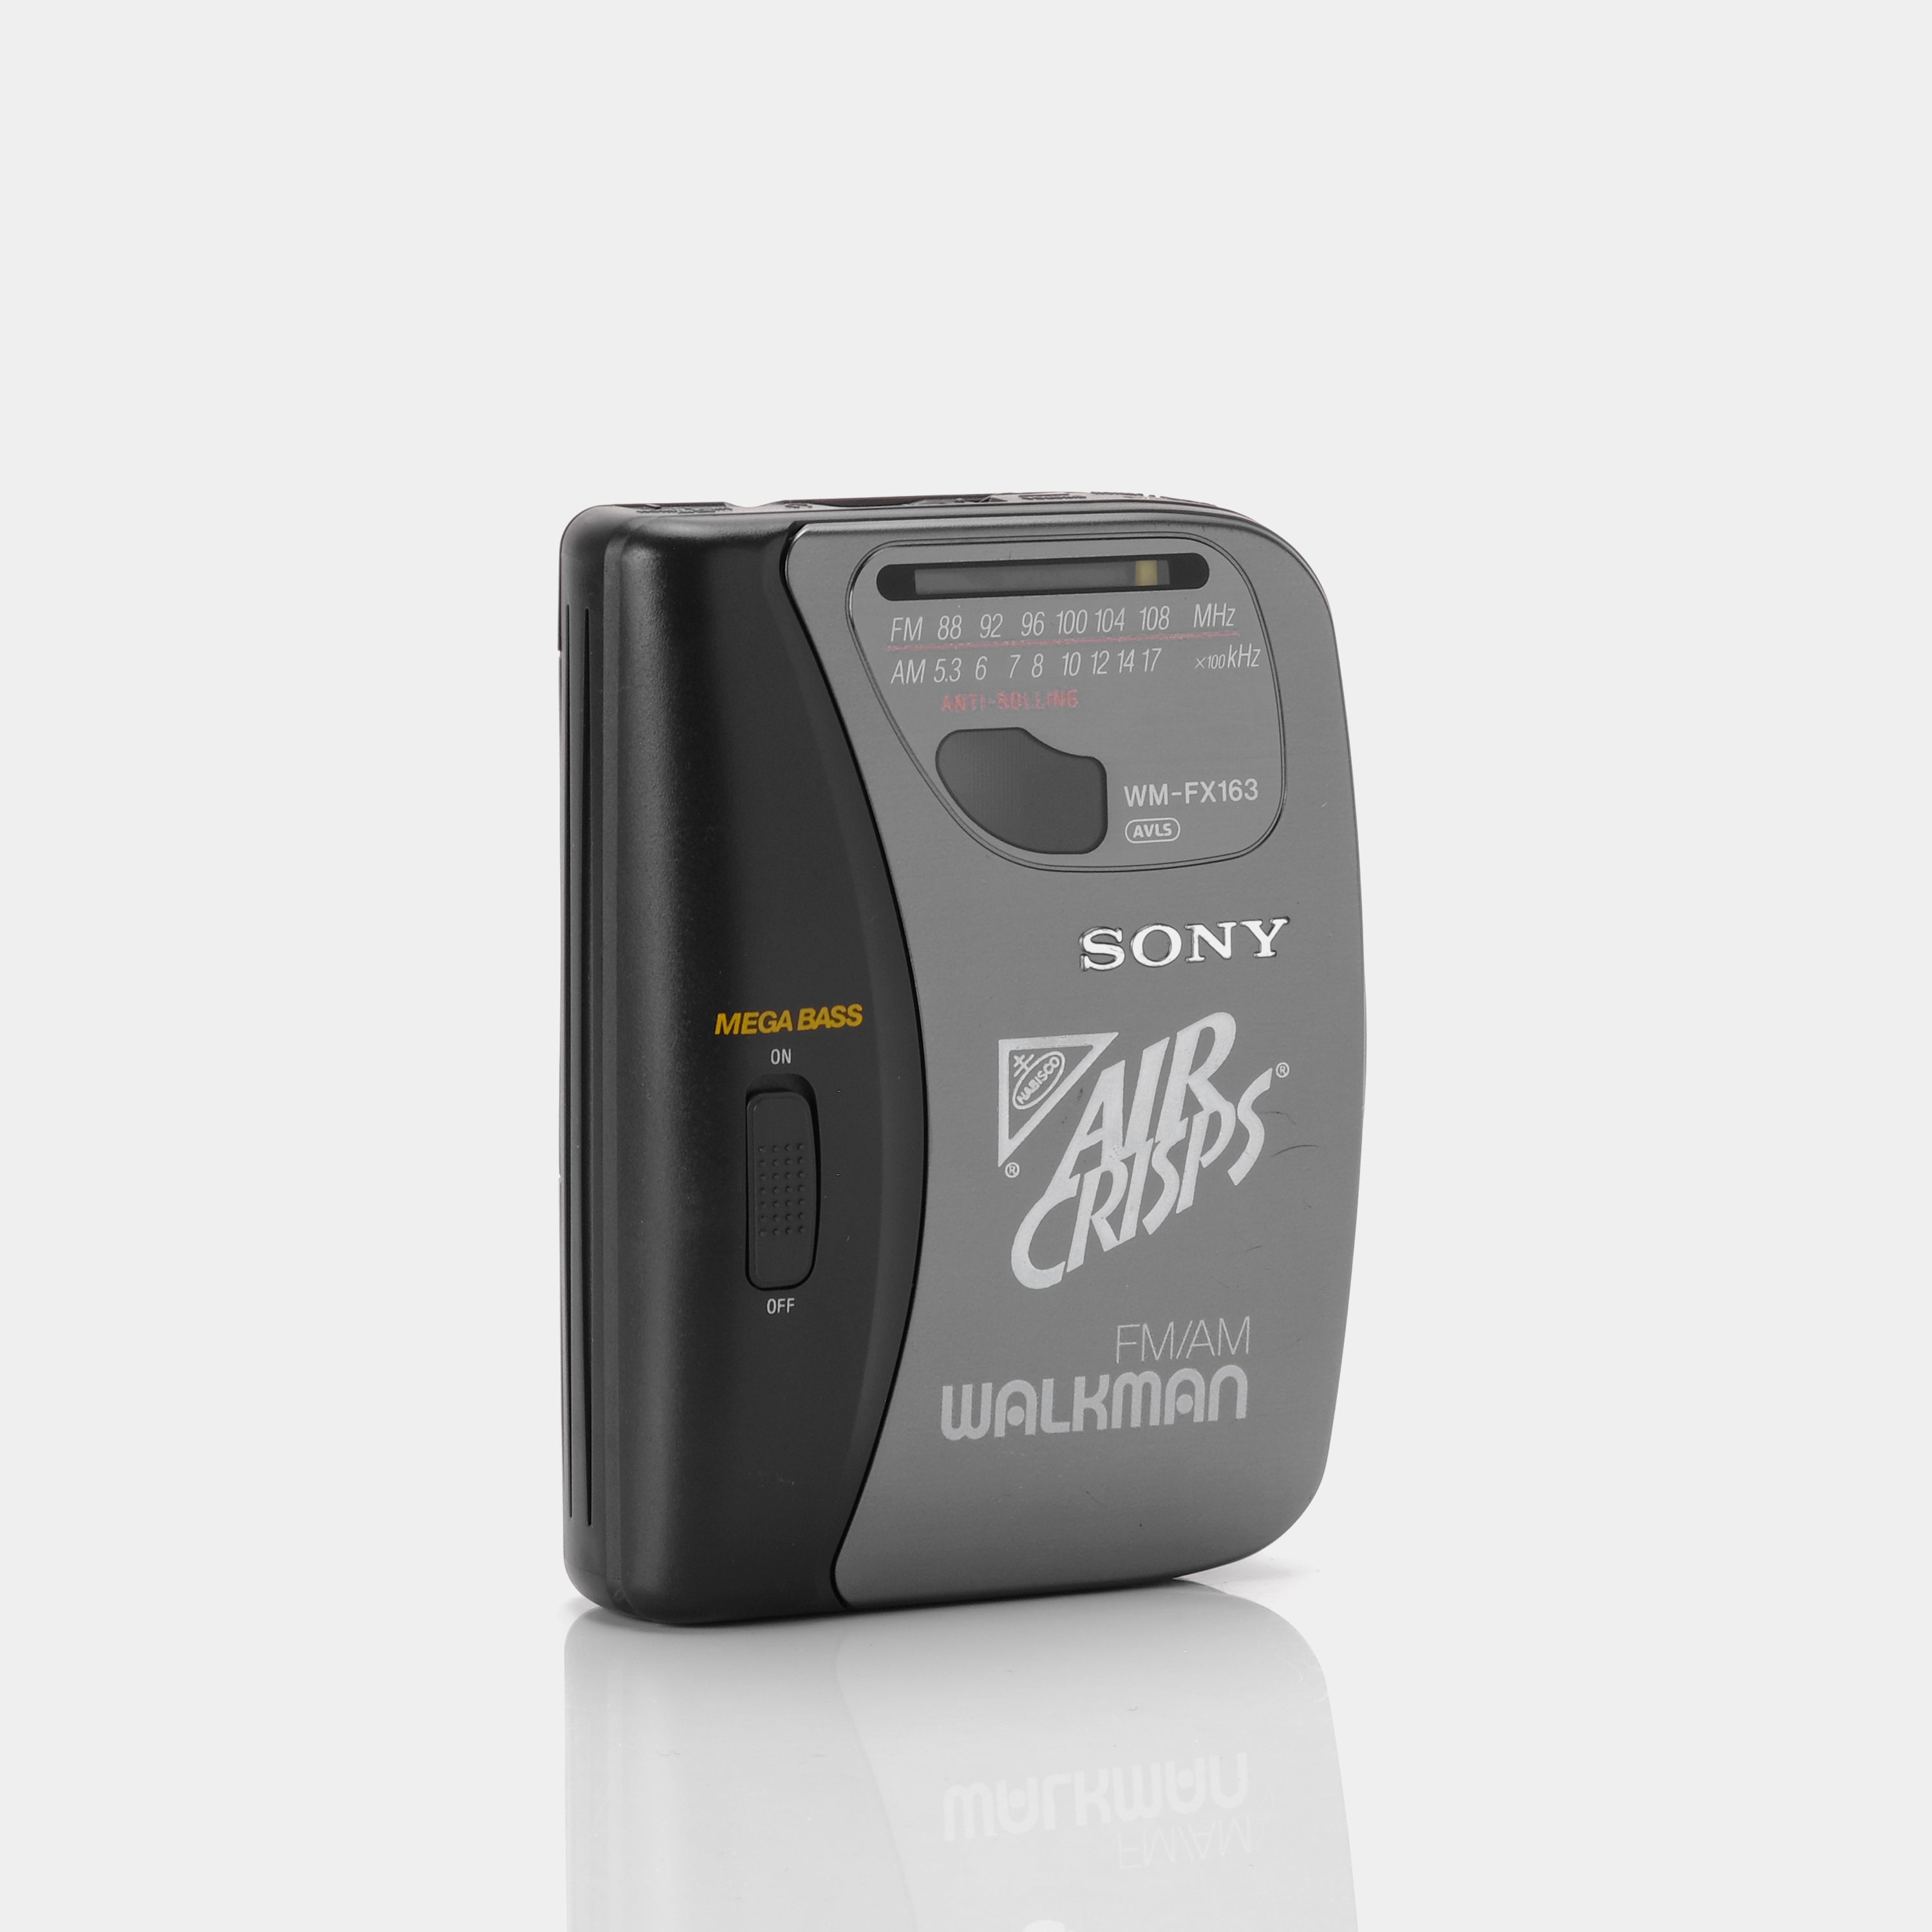 Sony Walkman WM-FX163 "Air Crisps" TV/AM/FM Portable Cassette Player